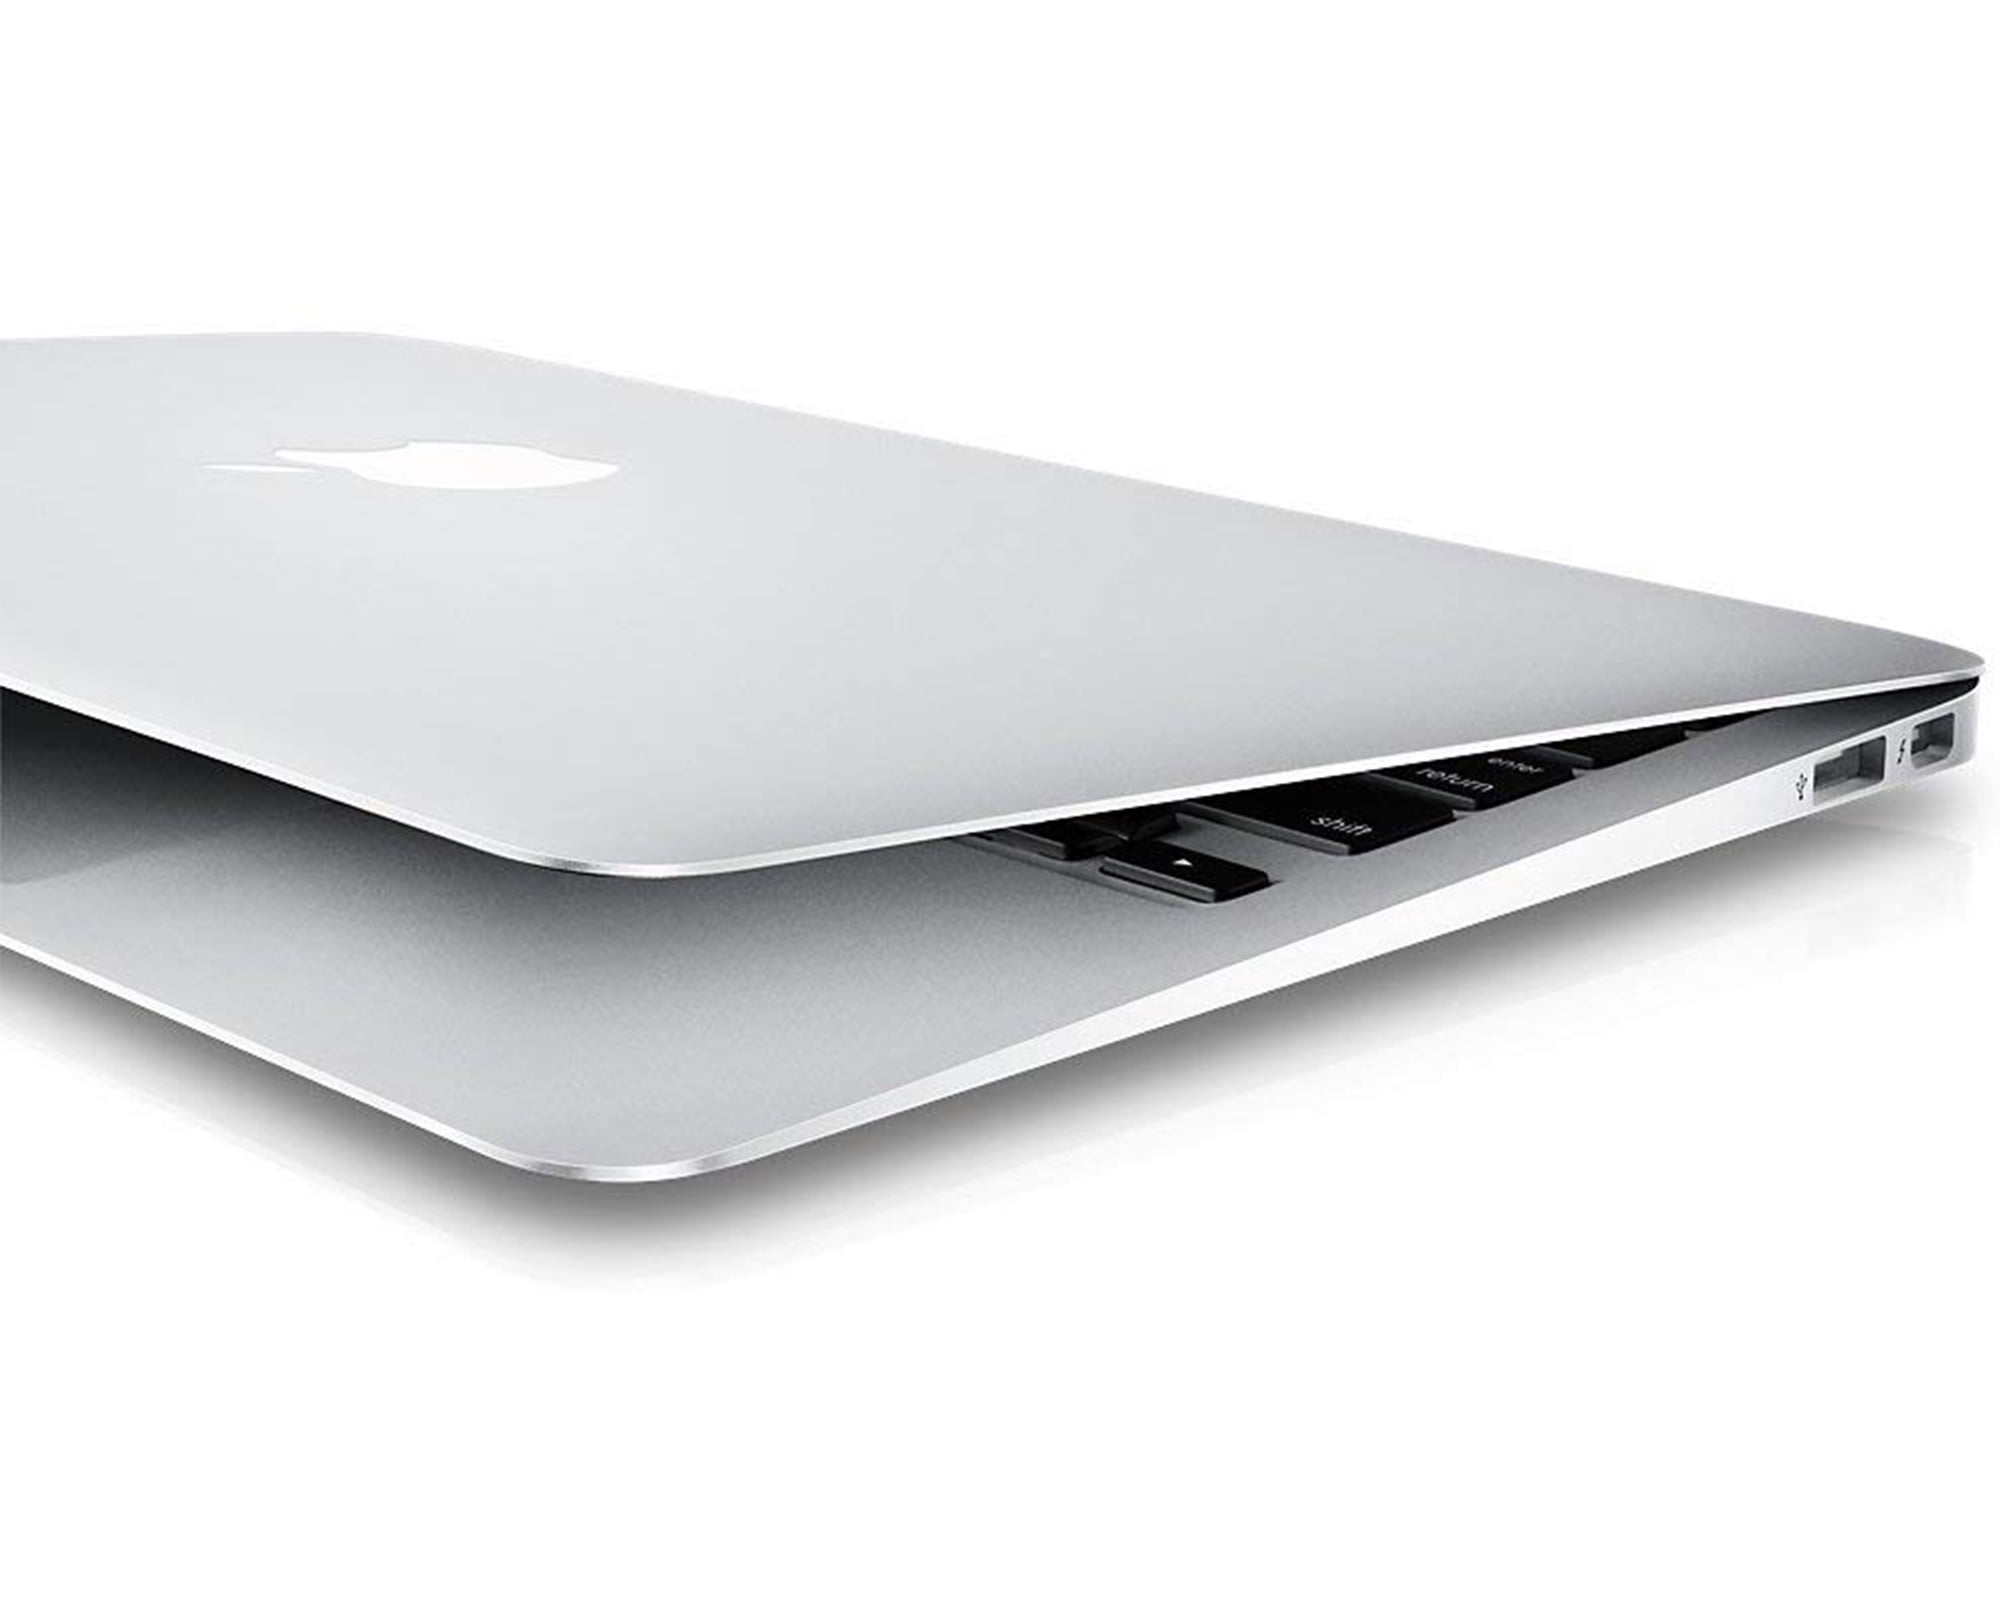 Apple MacBook Air, 13.3-inch, Intel Core i5, 4GB RAM, Mac OS 